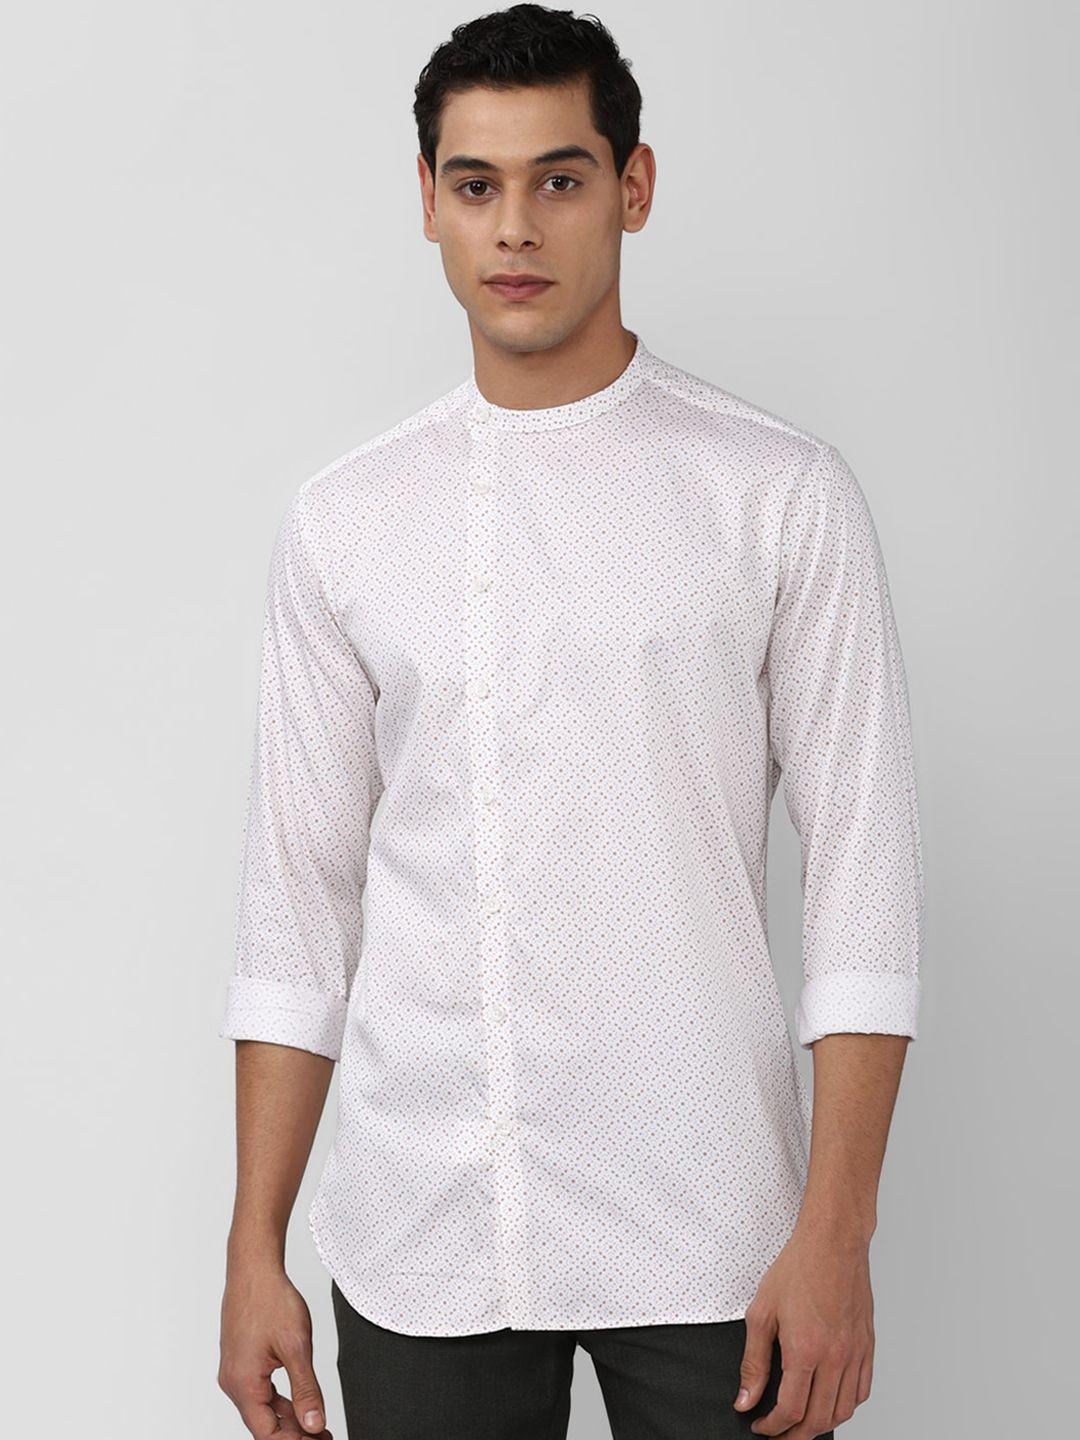 v-dot-men-white-slim-fit-printed-casual-shirt